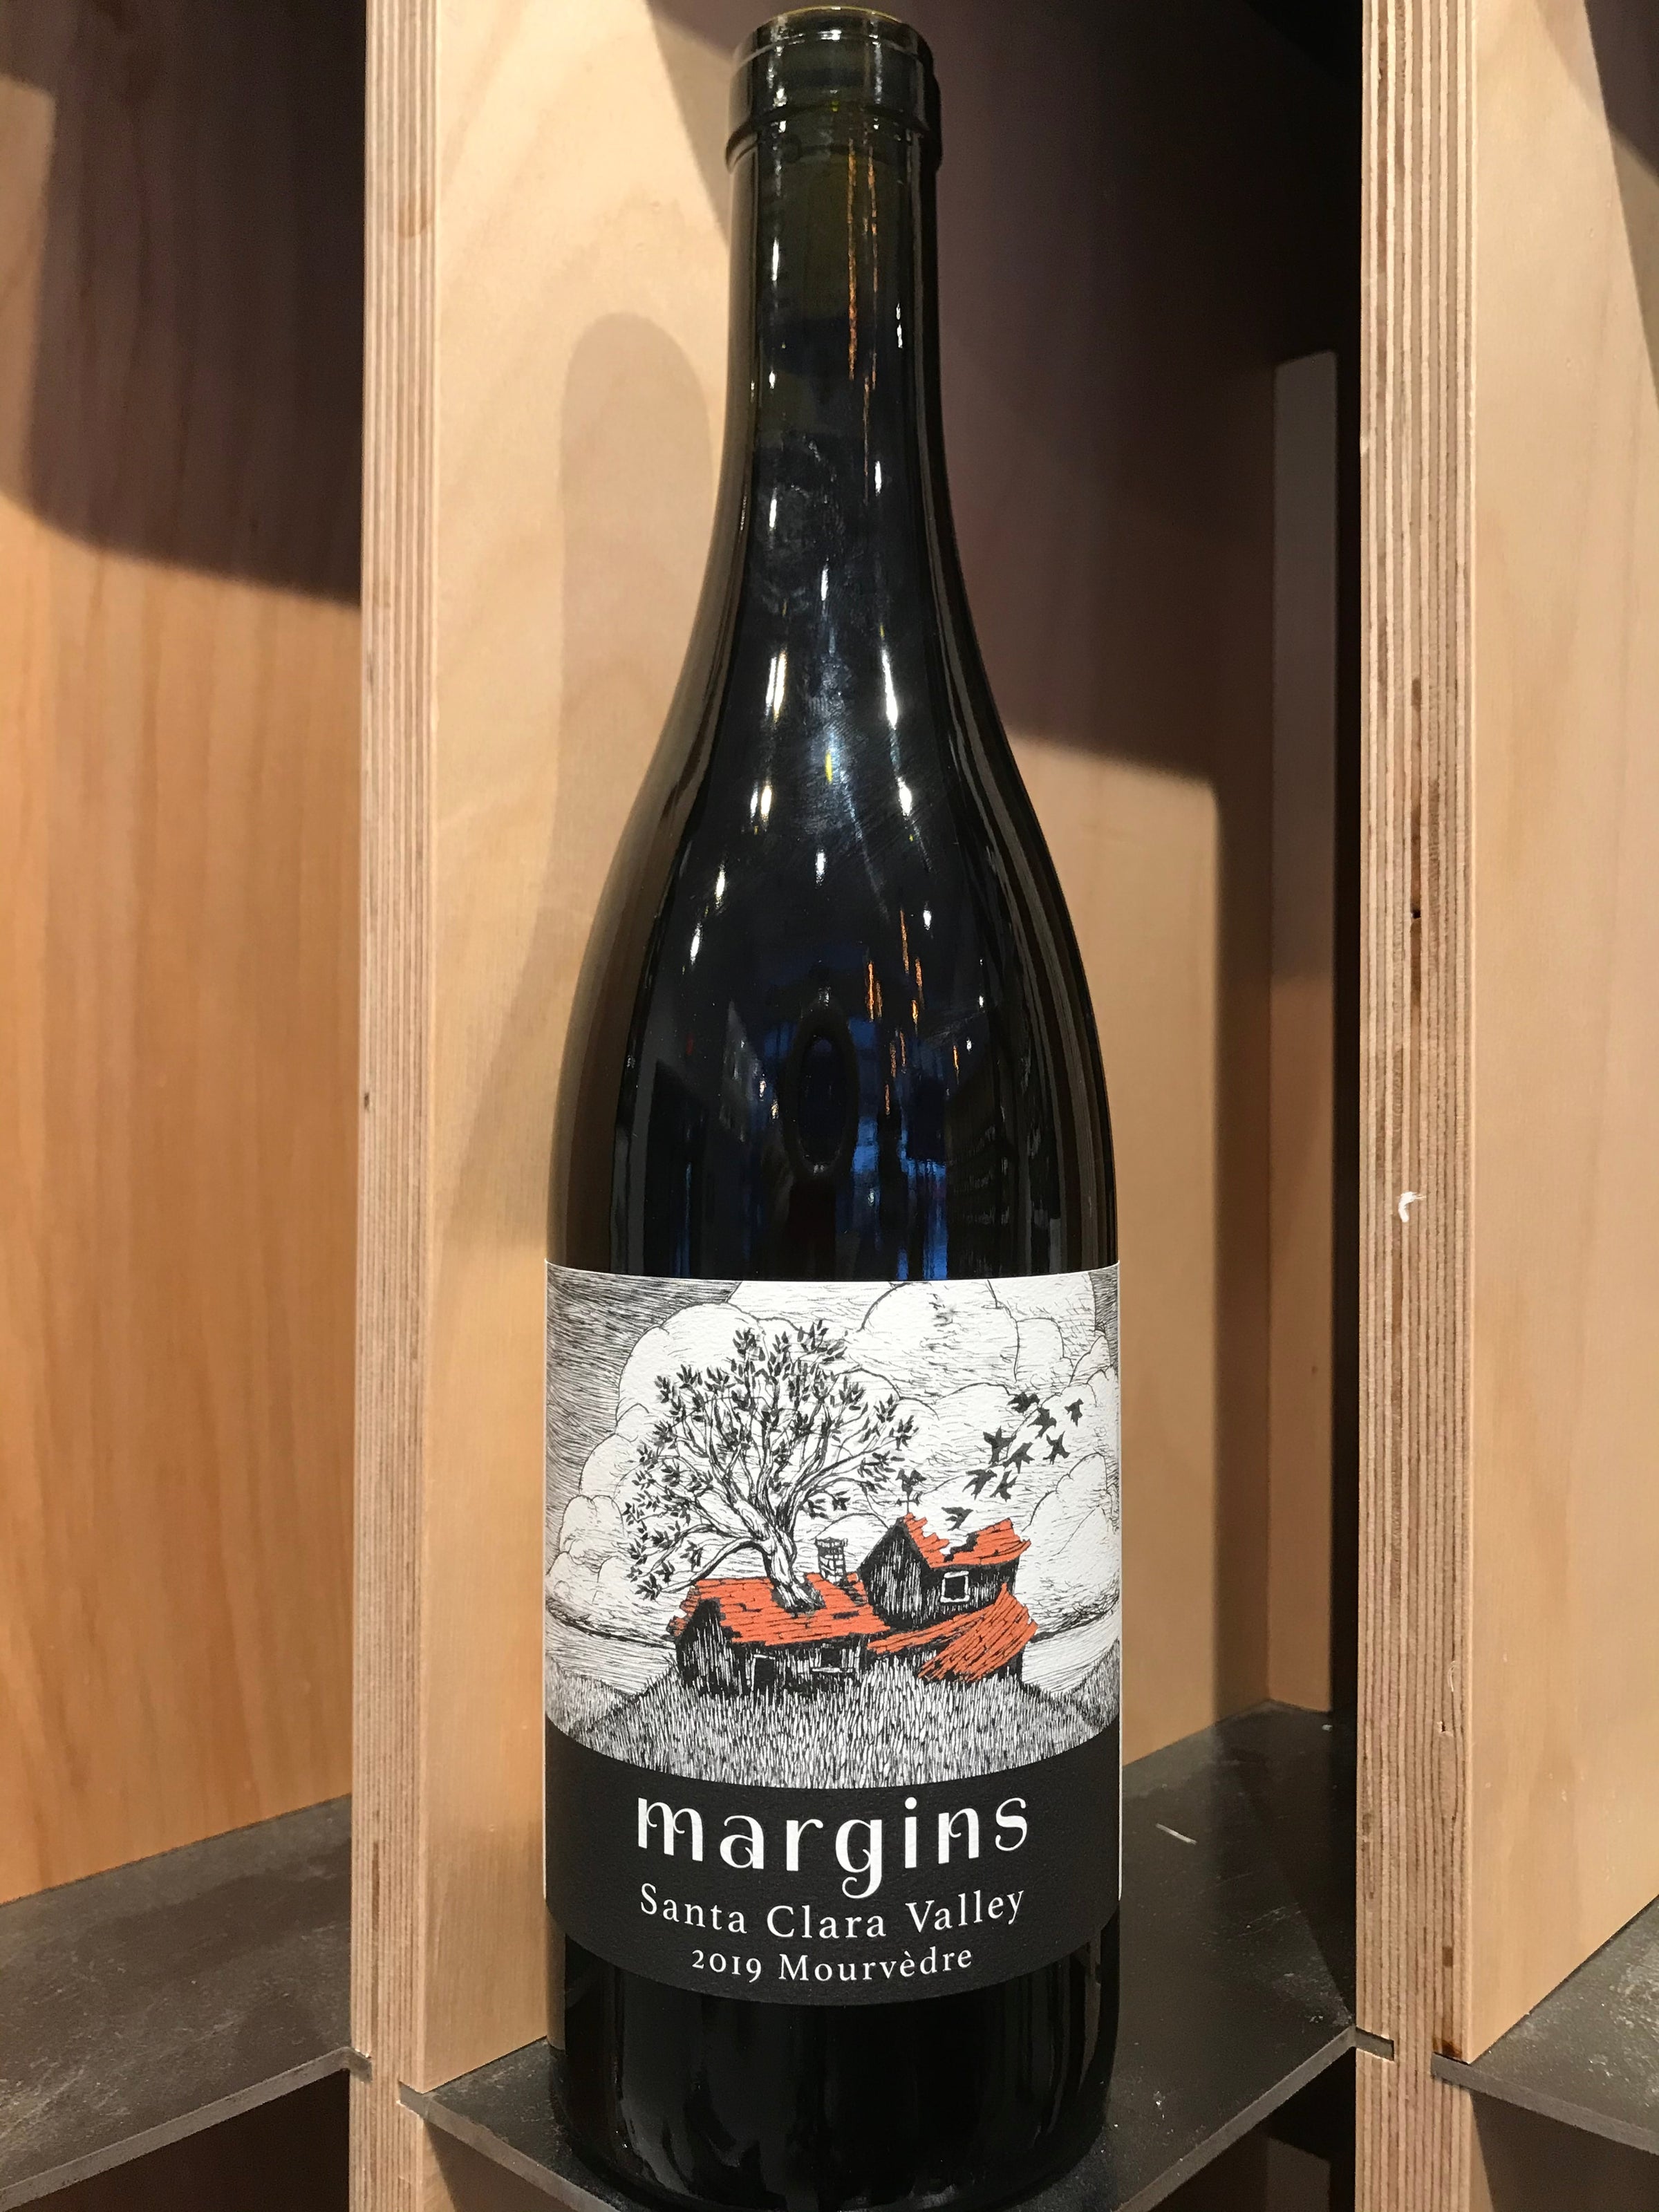 Margins Santa Clara Valley Counoise - Small Wine Shop